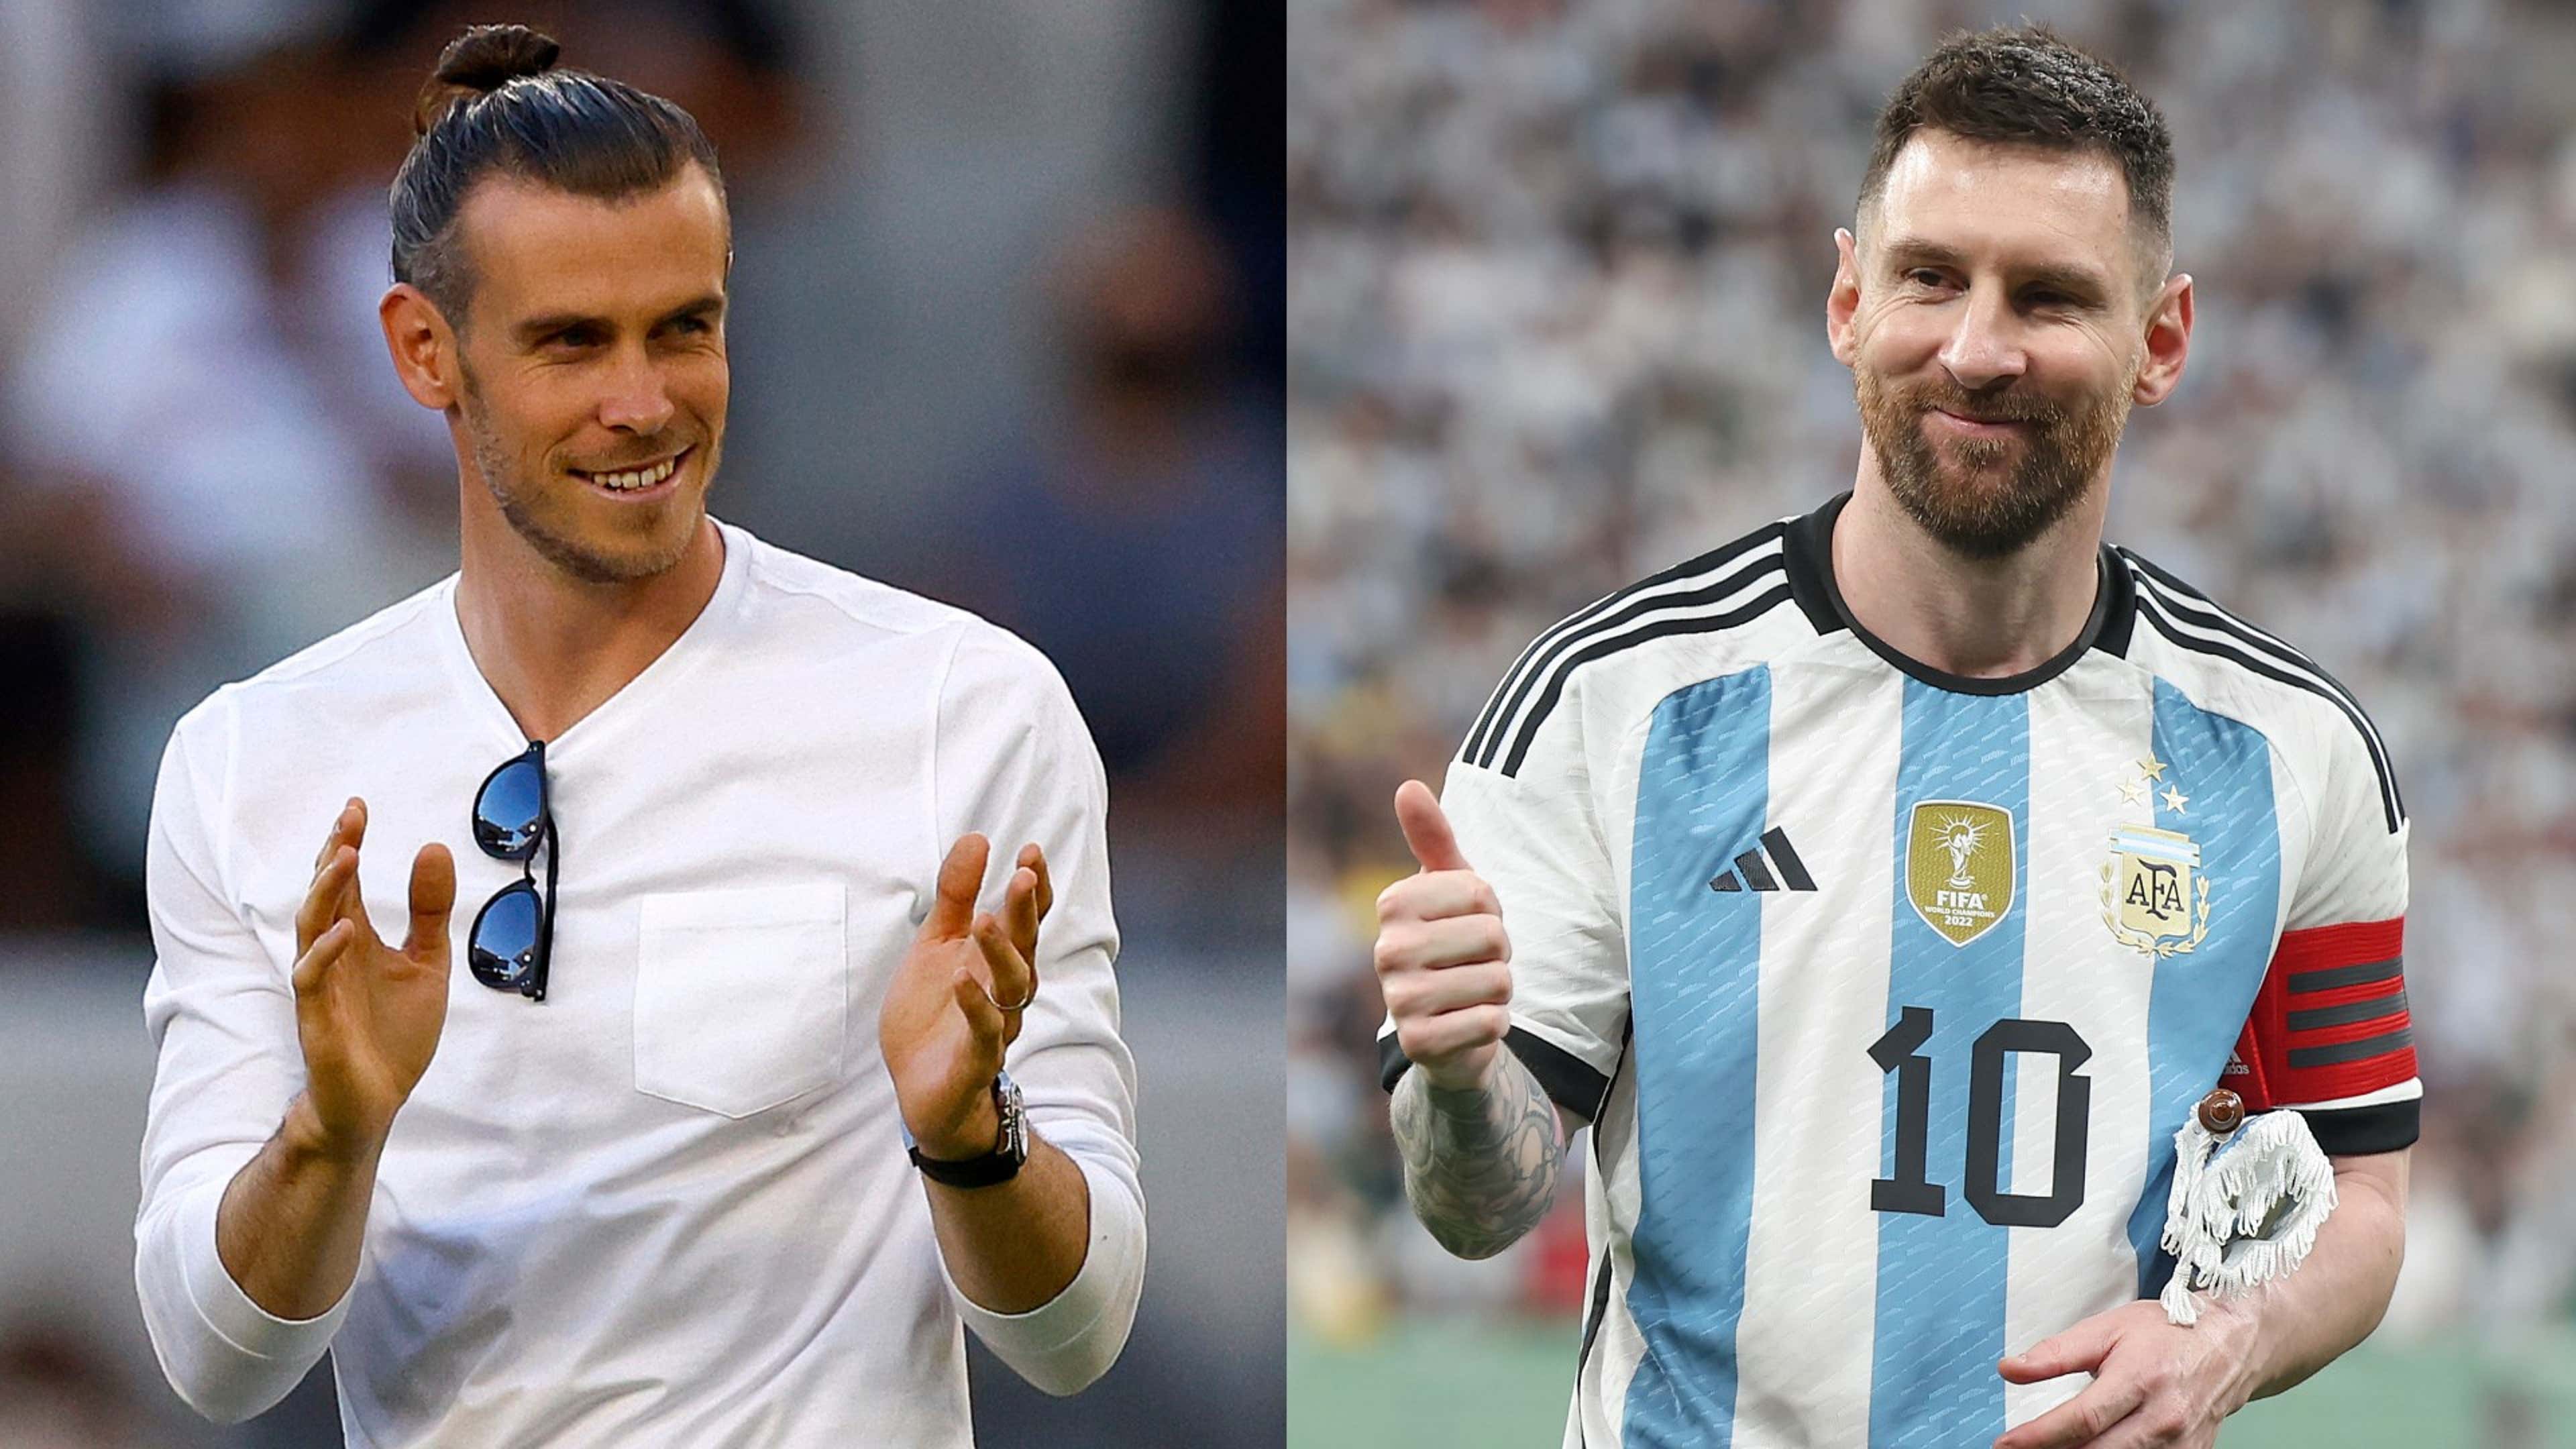 Gareth Bale's MLS Cup Stunner As Heard Around The Globe 